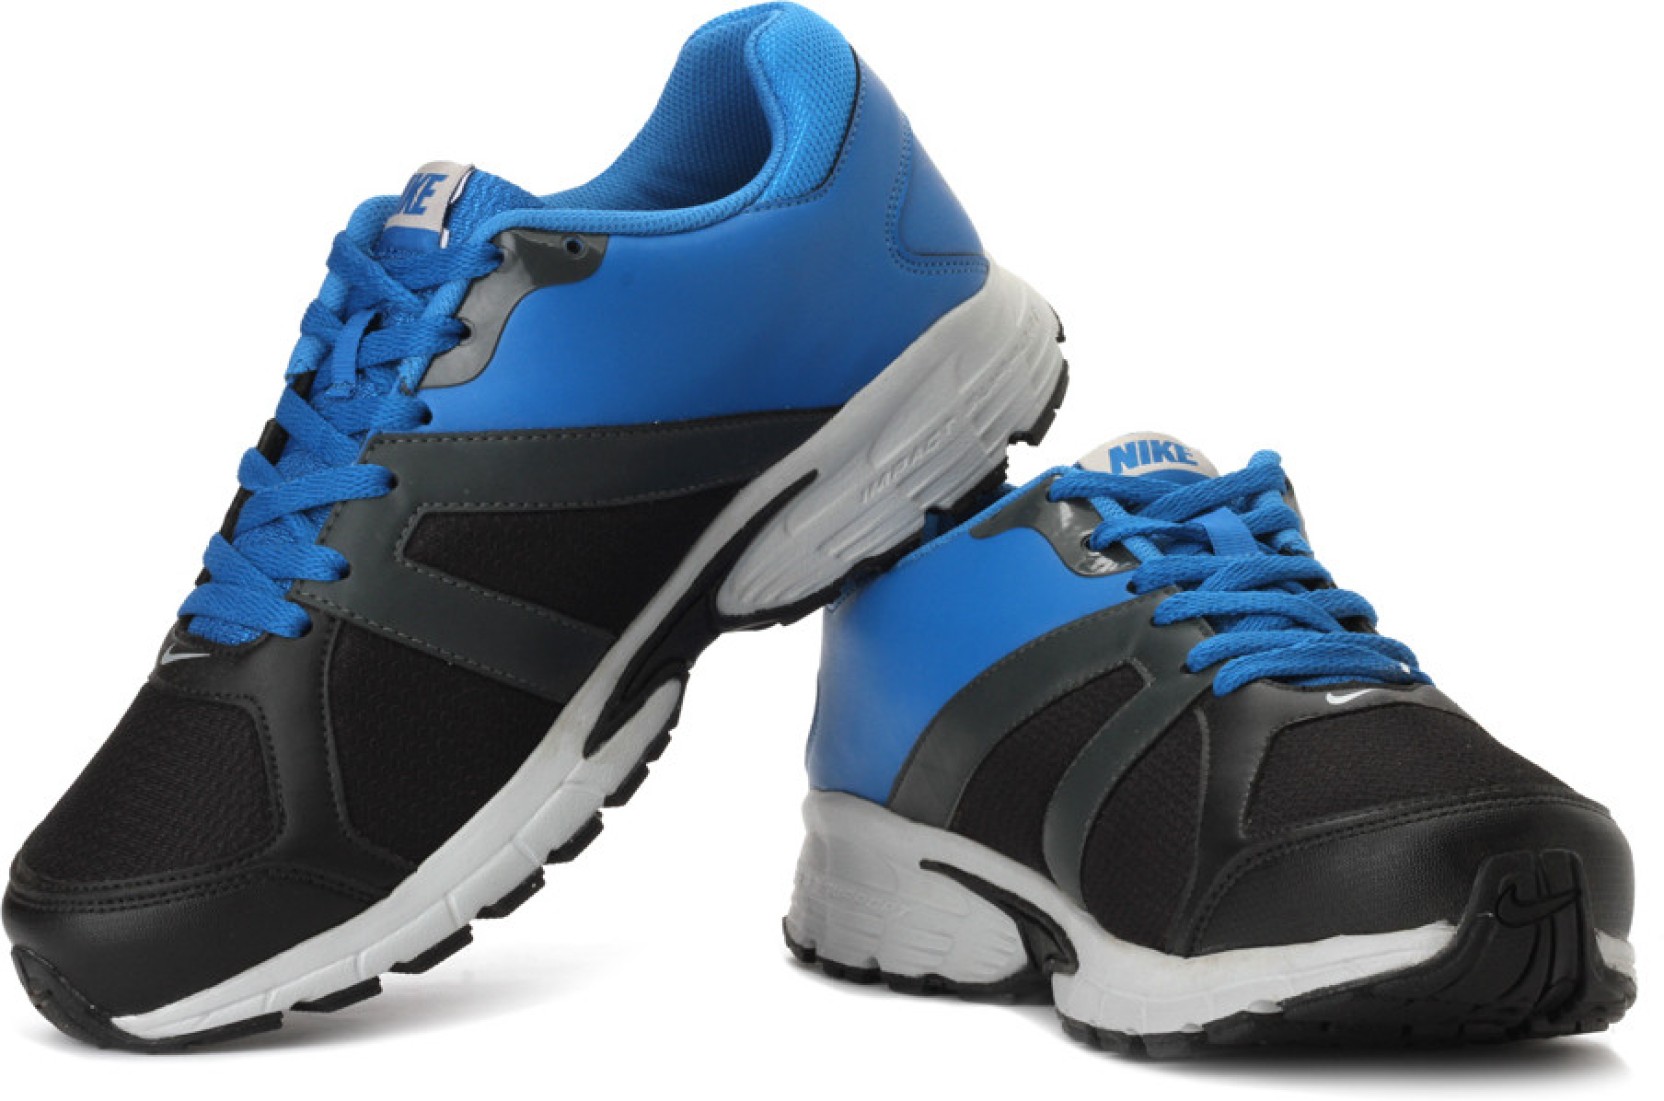 Nike Running Shoes - Buy Black, Metallic Silver Color Nike Running ...